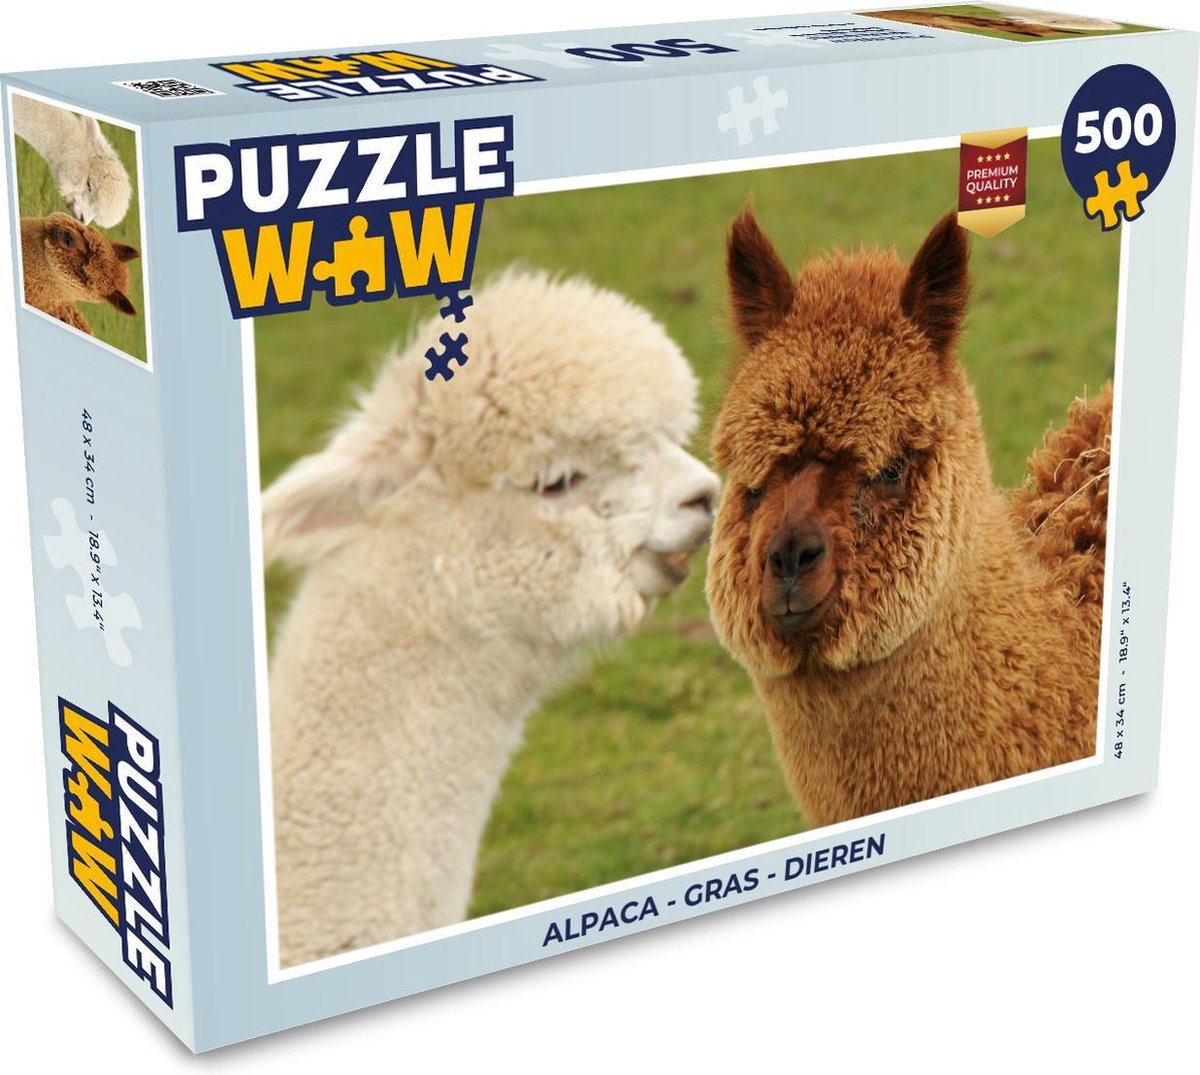 Afbeelding van product PuzzleWow  Puzzel Alpaca - Gras - Dieren - Legpuzzel - Puzzel 500 stukjes